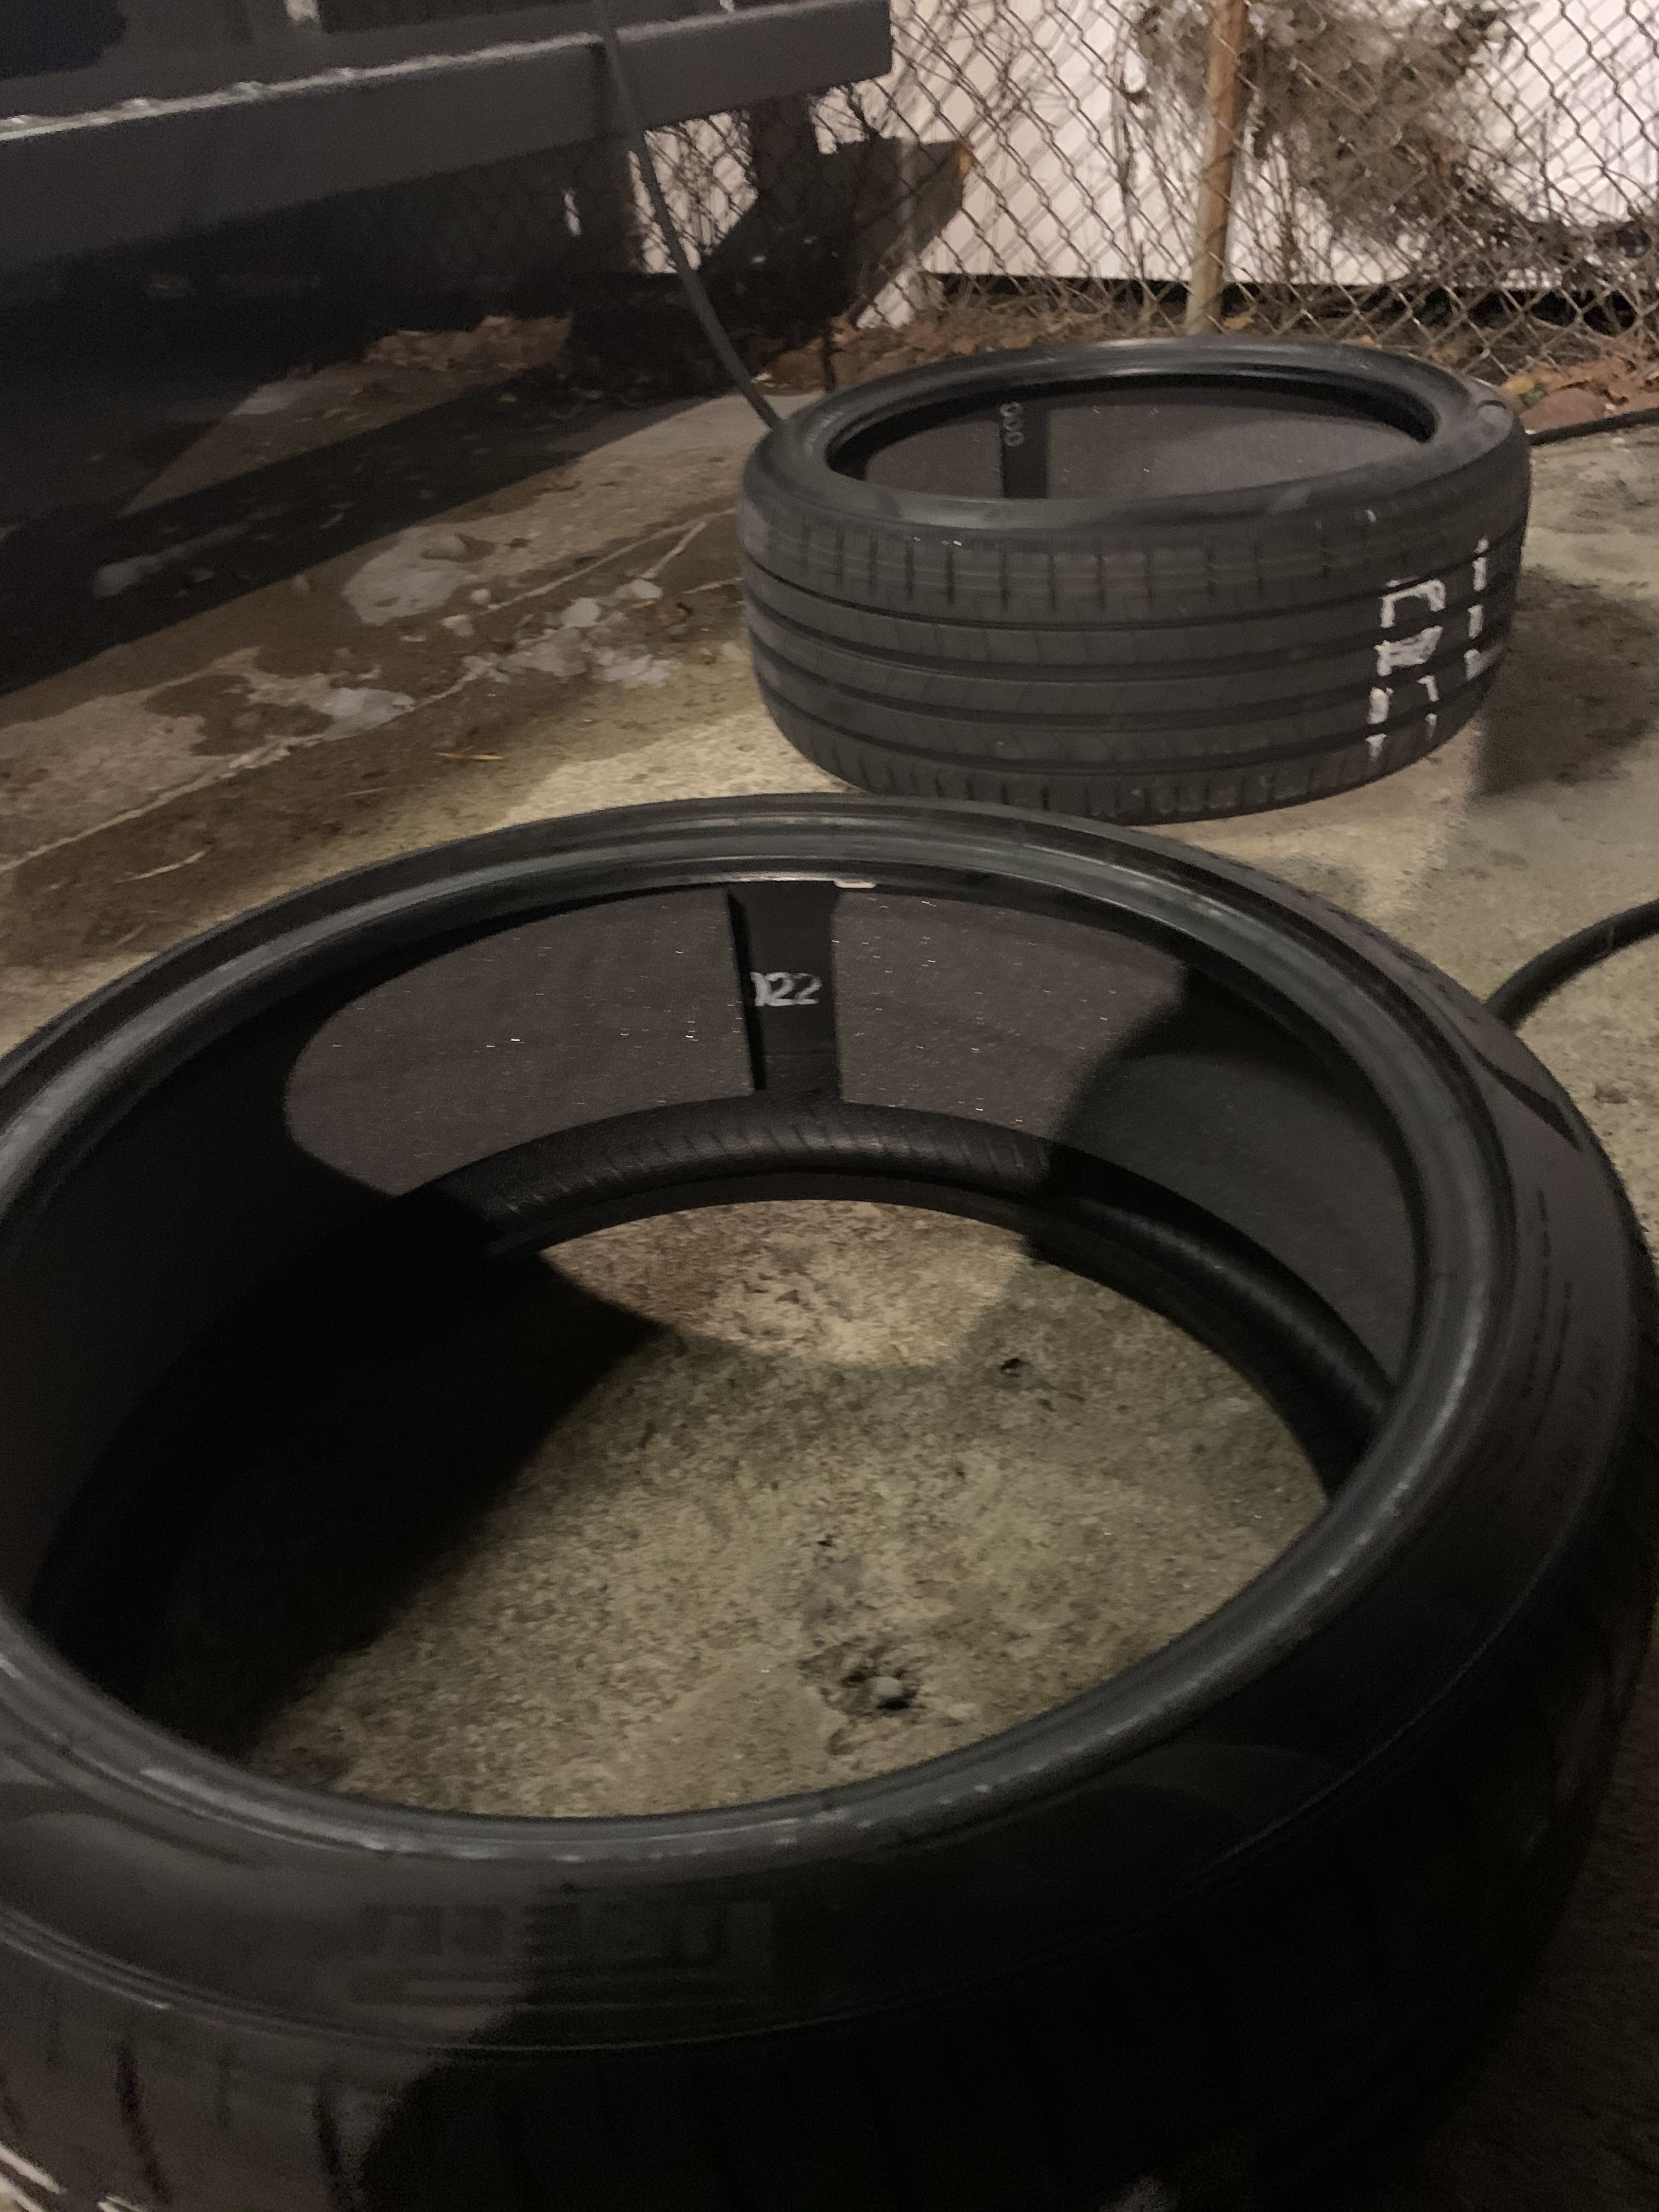 Model 3 Performance Pirelli Tires (Noise Cancelling Foam)